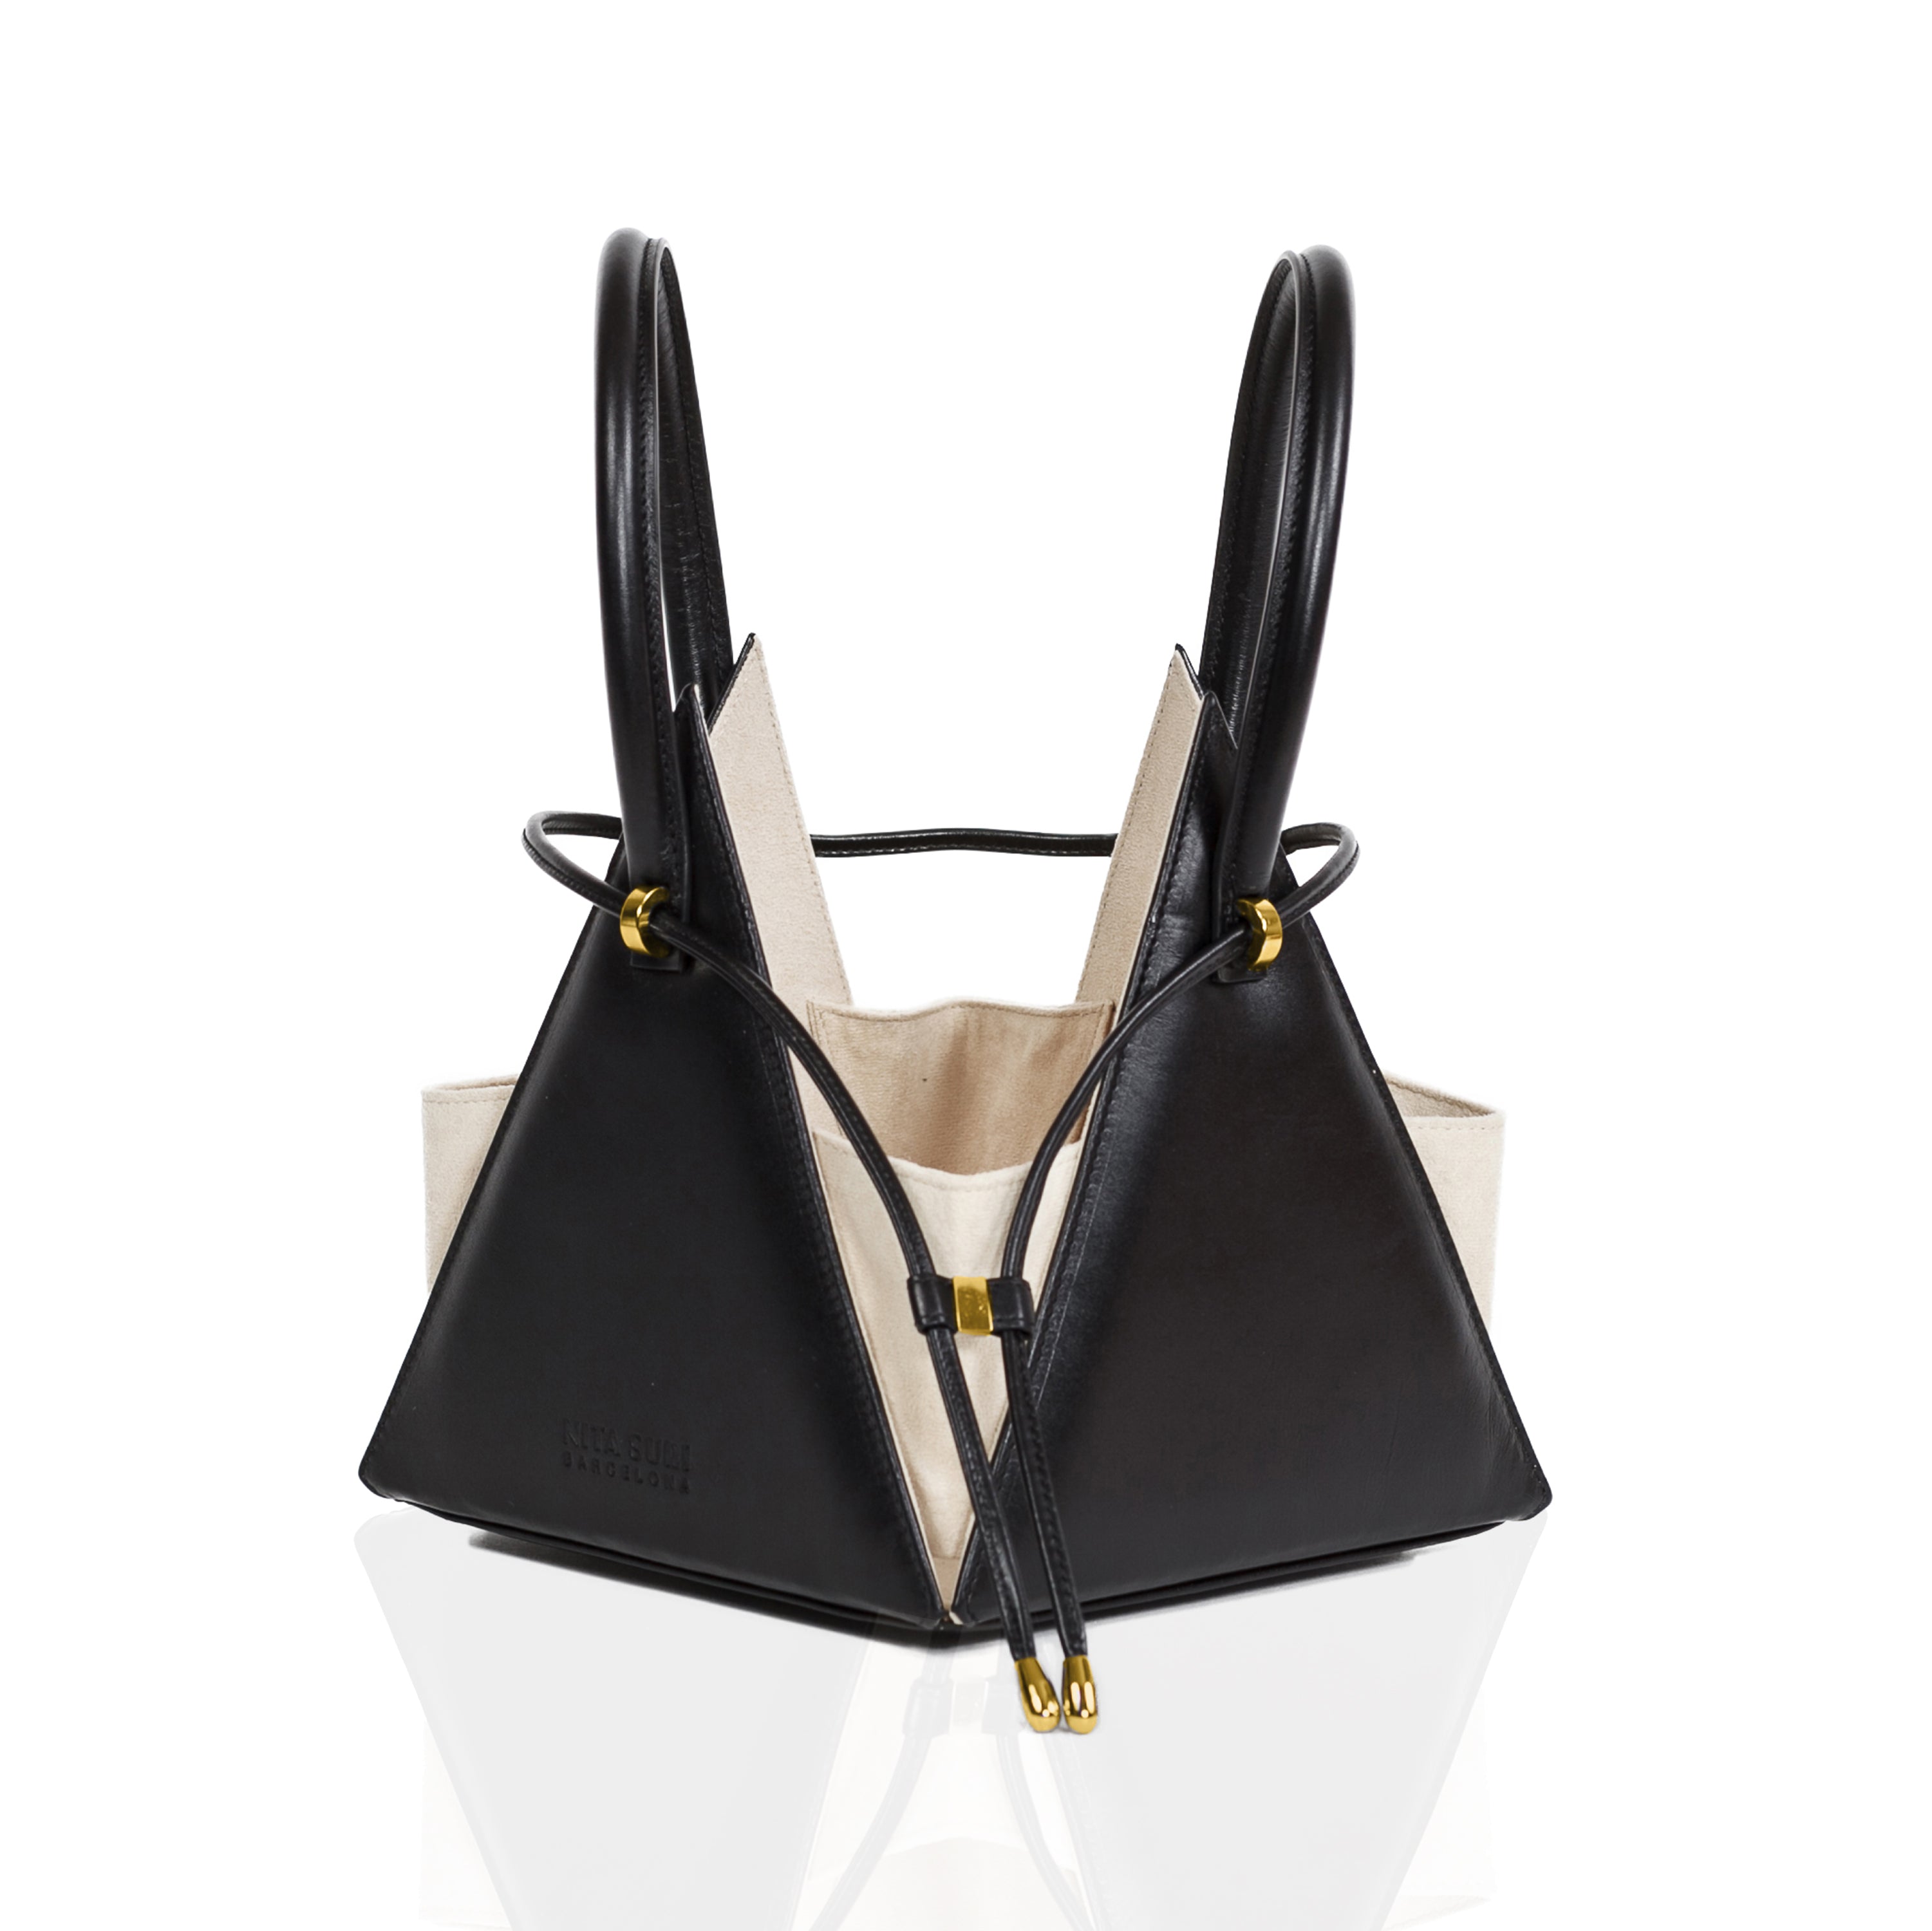 bag high end luxury brand pyramid